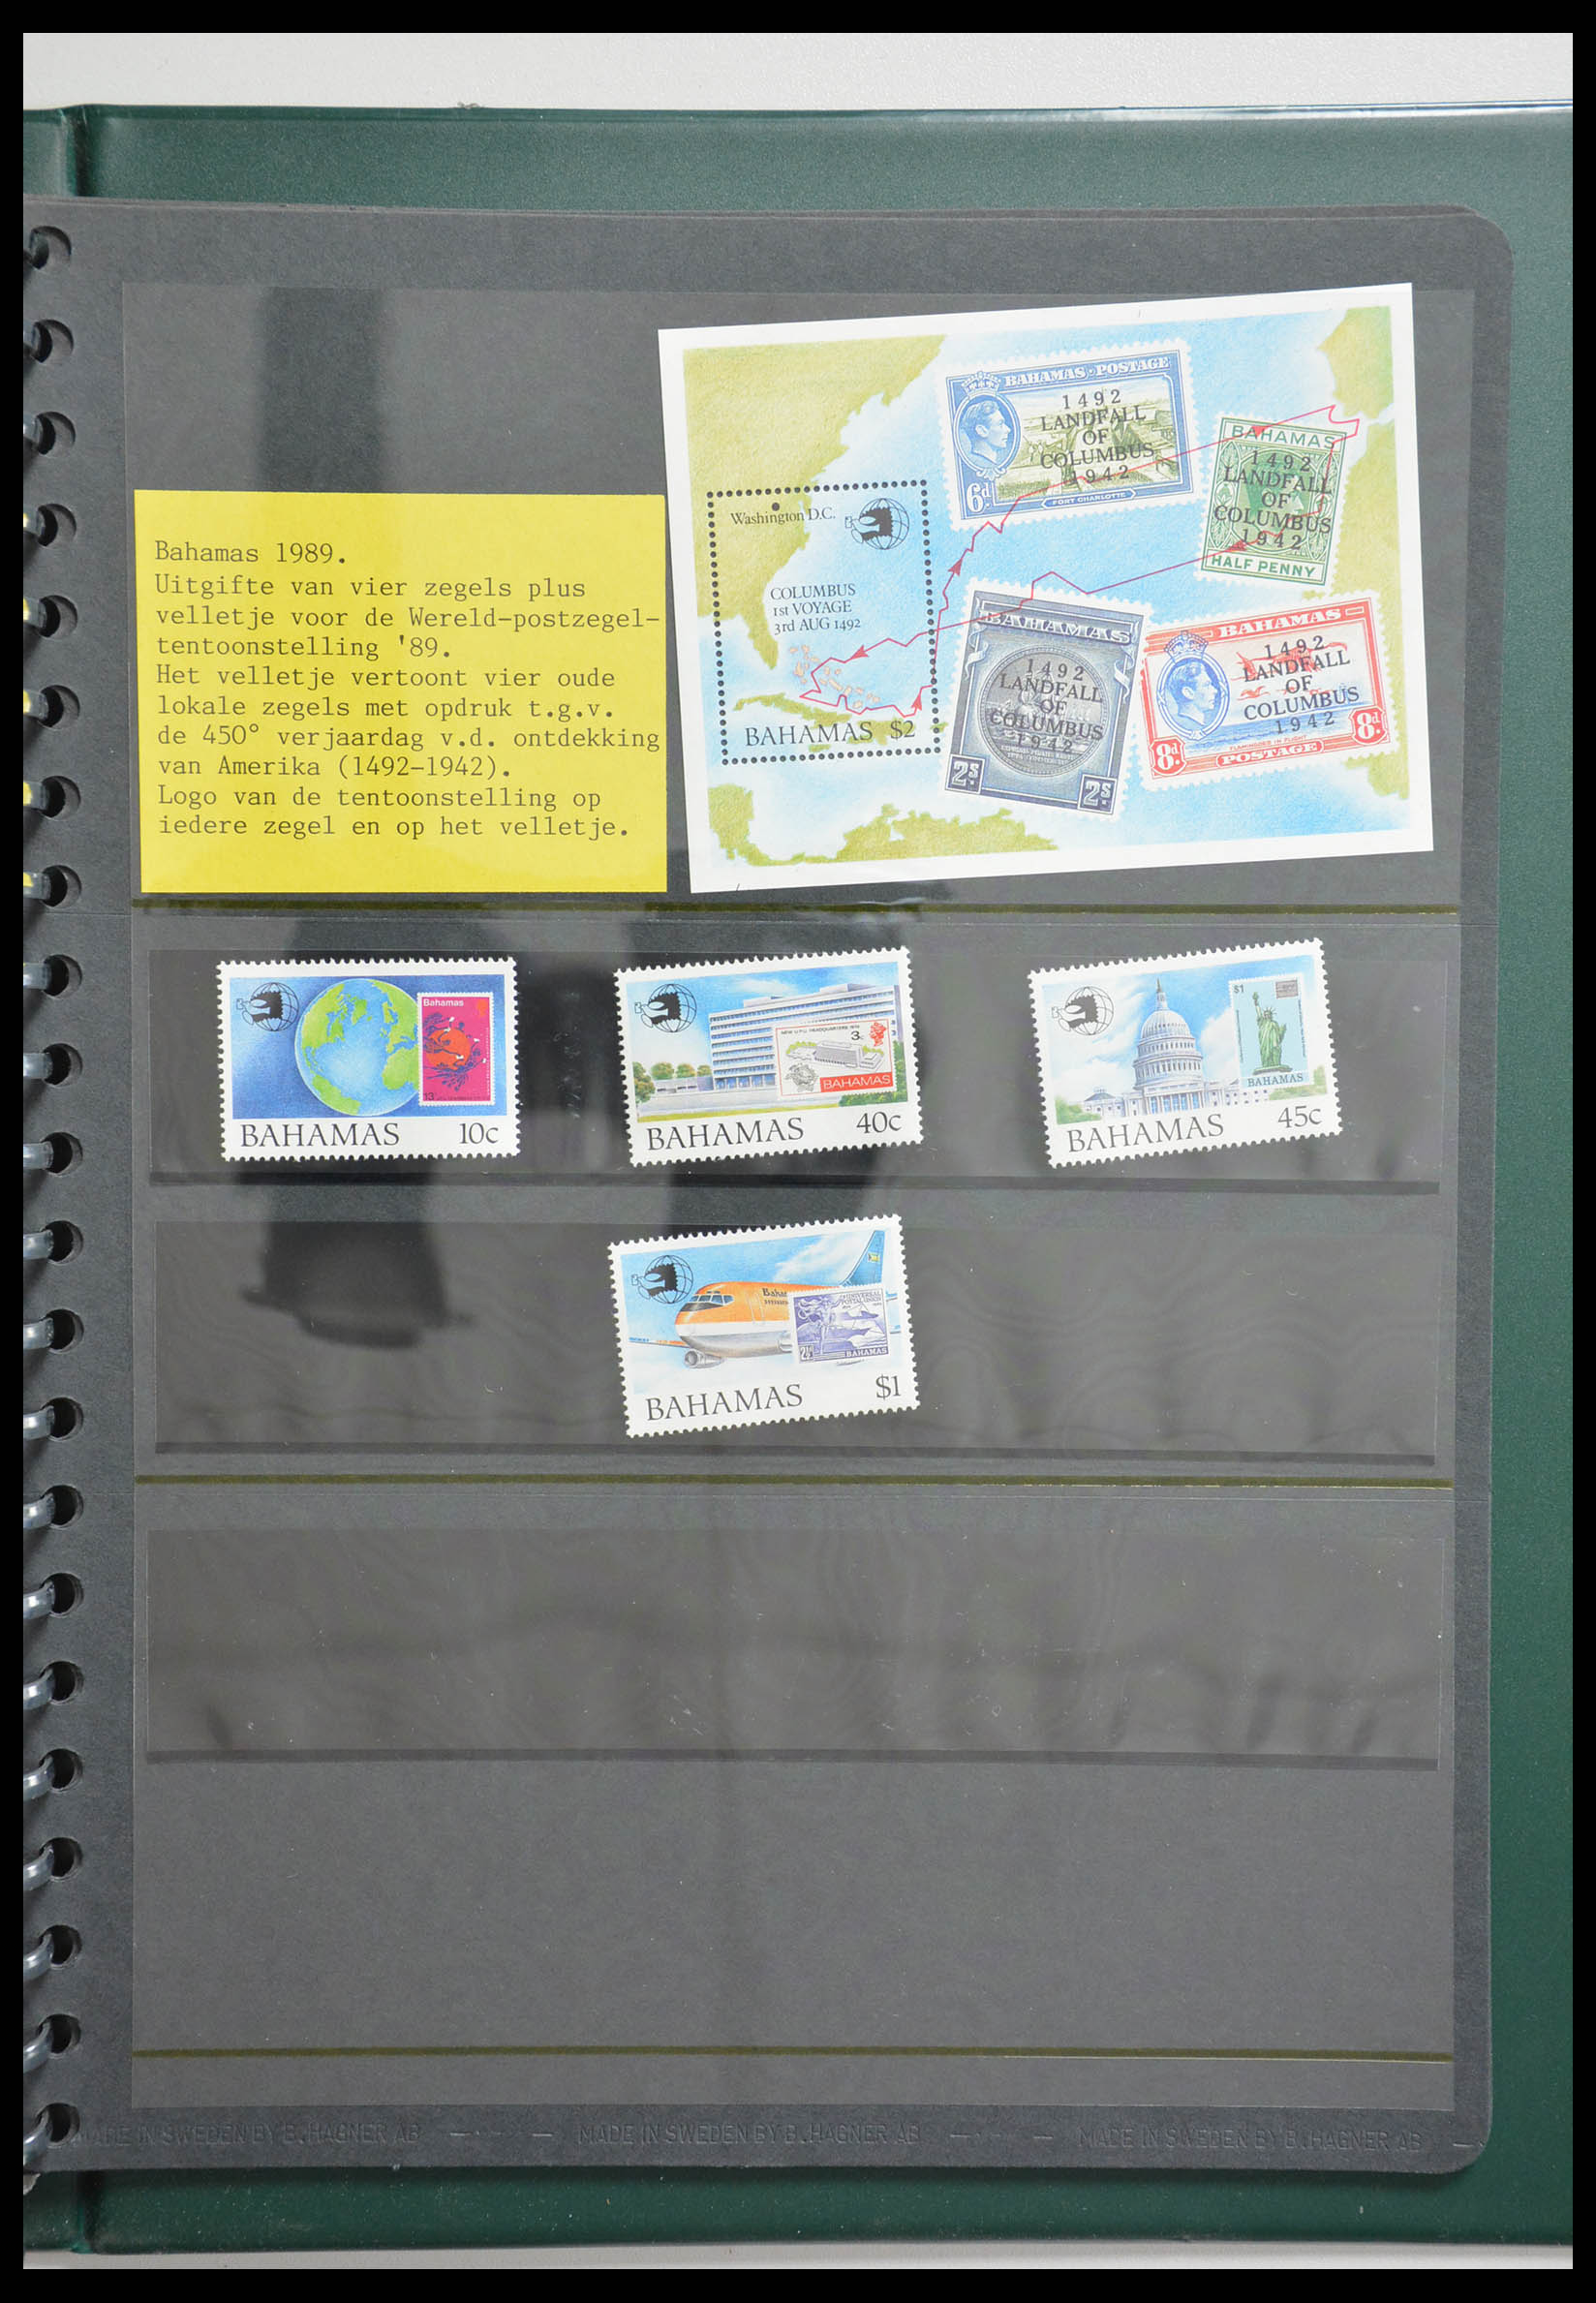 28337 133 - 28337 Postzegel op postzegel 1840-2001.